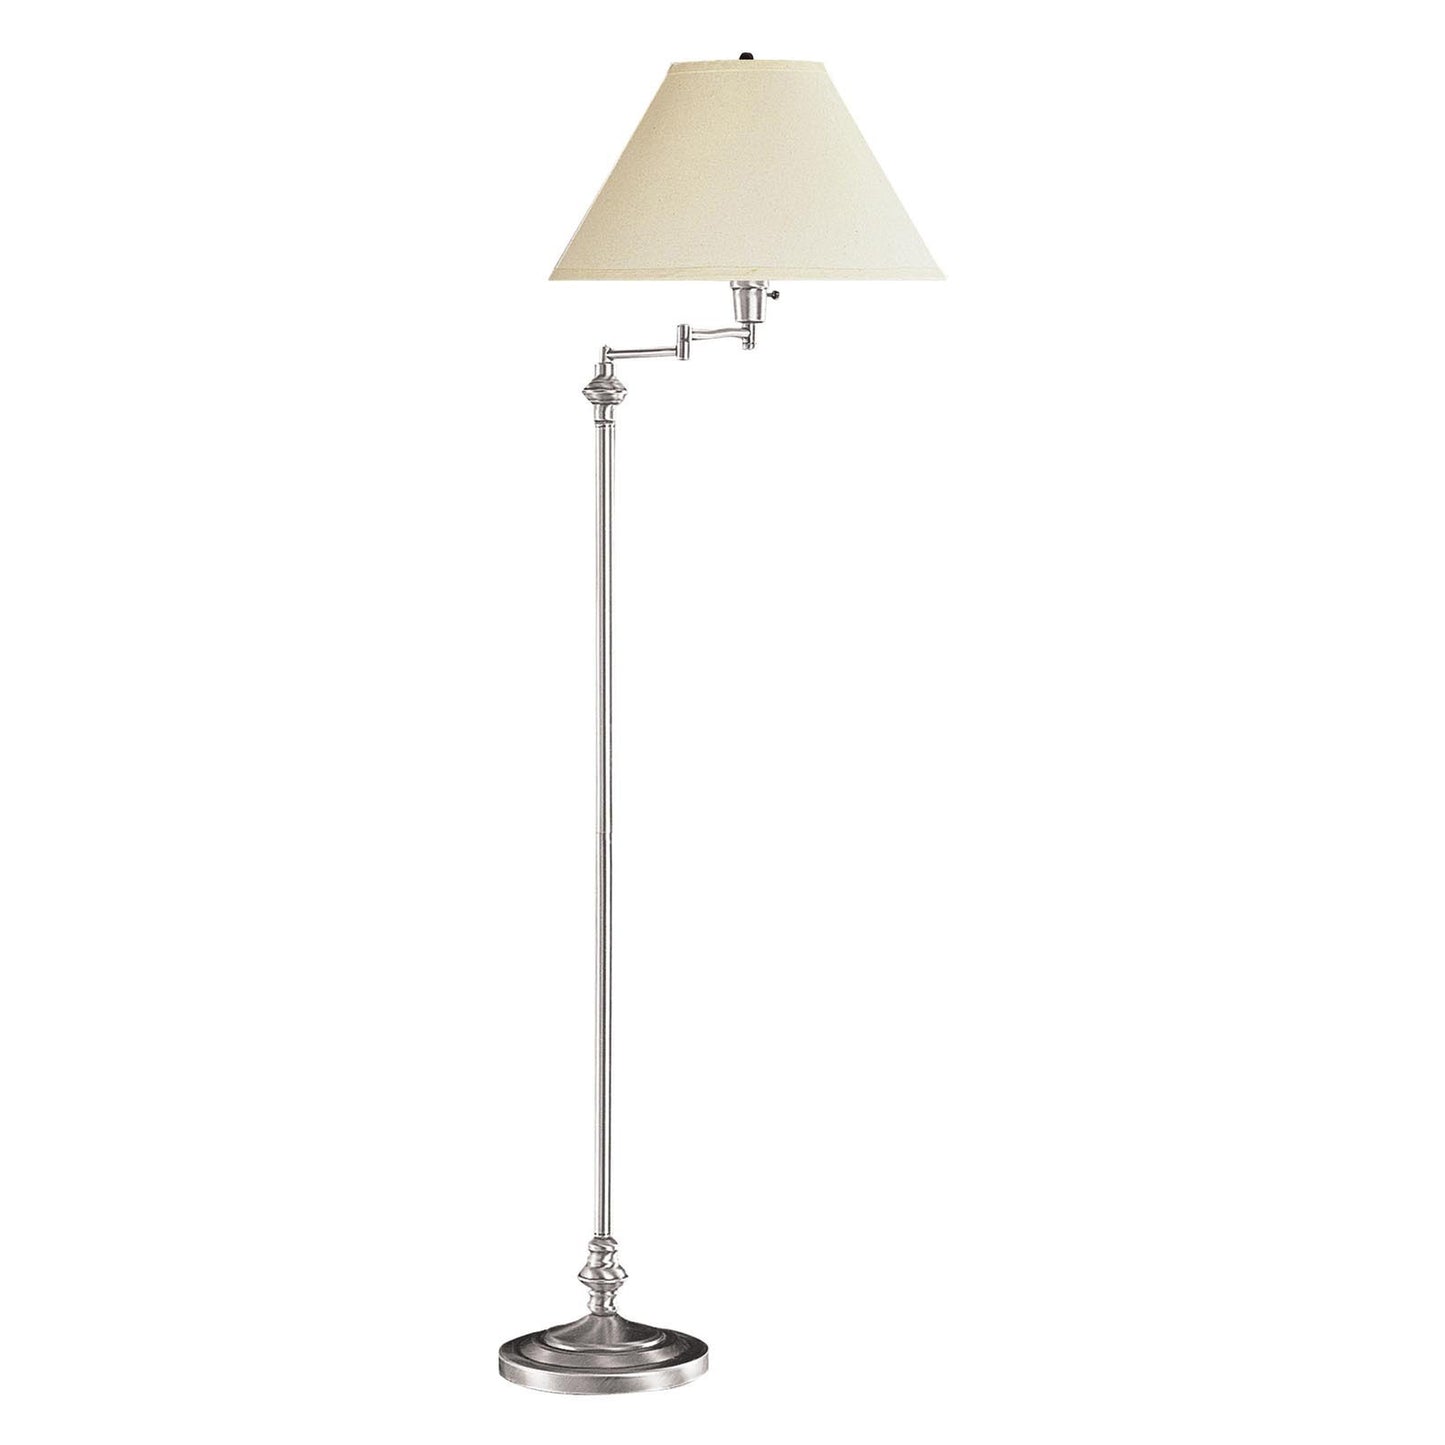 59" Nickel Swing Arm Floor Lamp With Beige Fabric Empire Shade